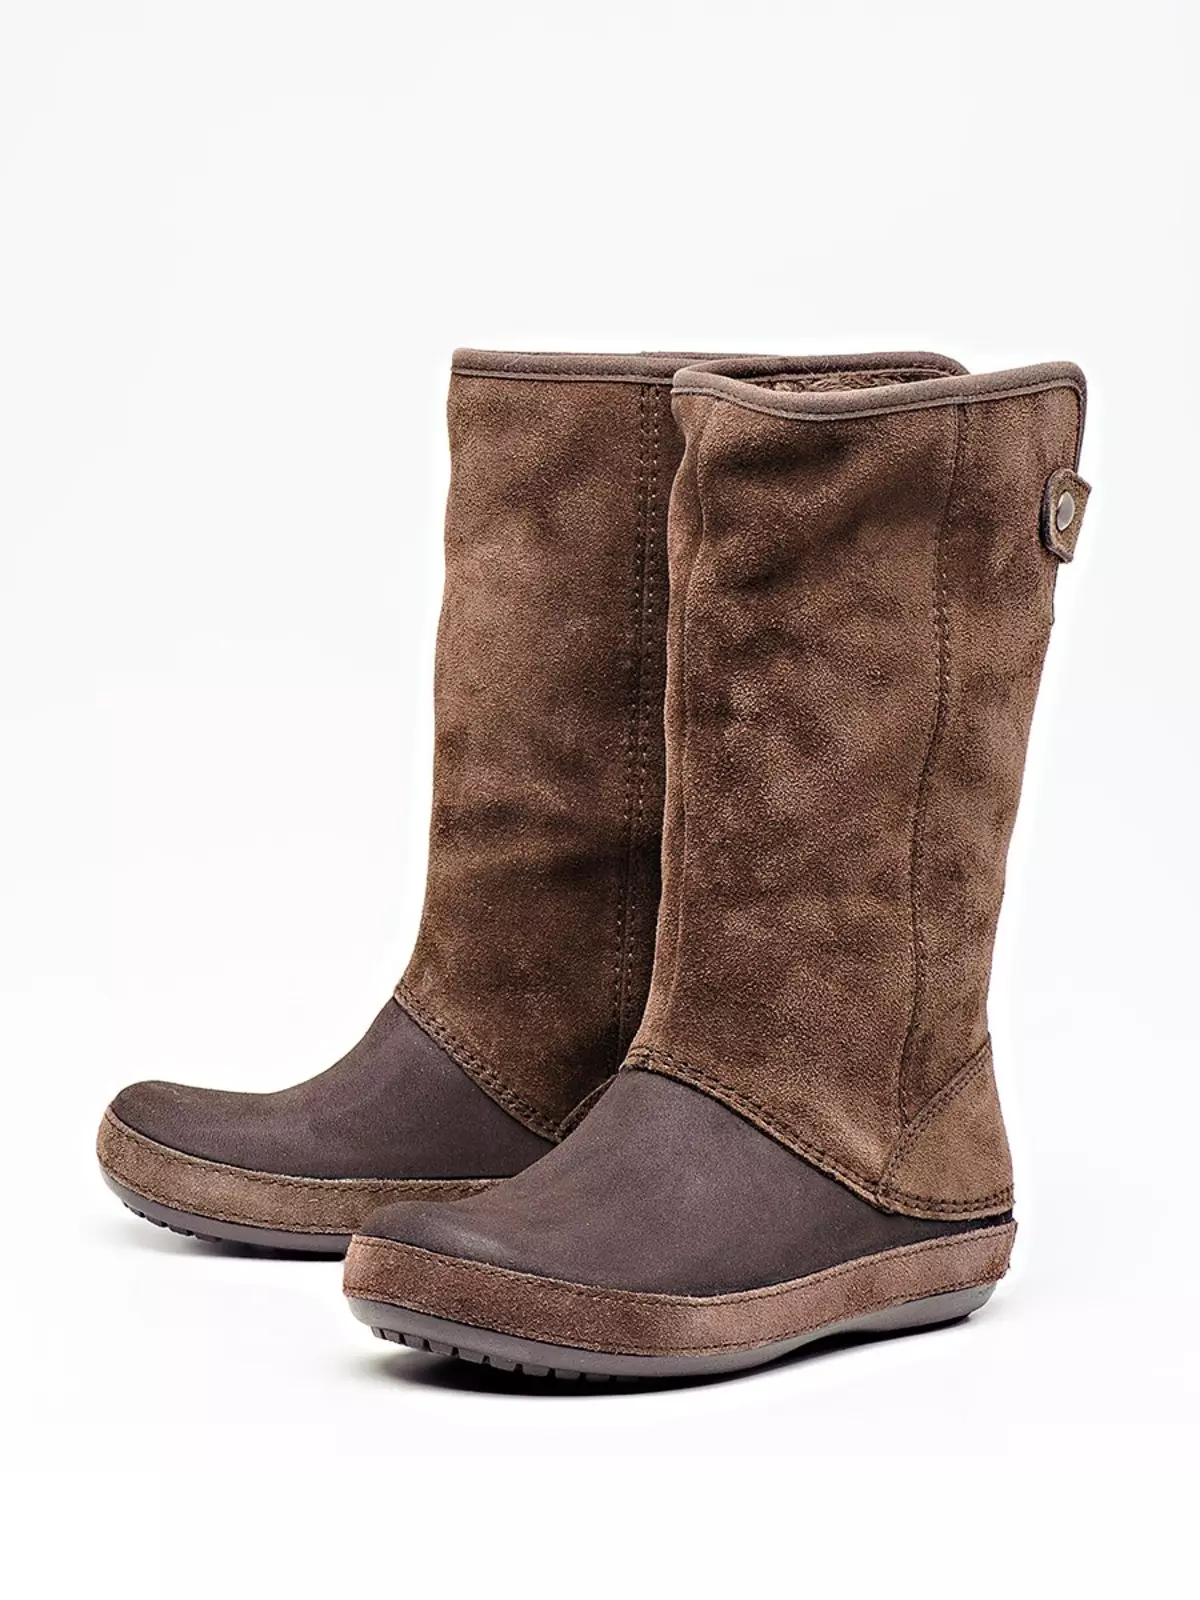 CROCS Winter Boots (32 Foto): Model Panas Bayi untuk Winter, Ulasan Pemilik 2094_7